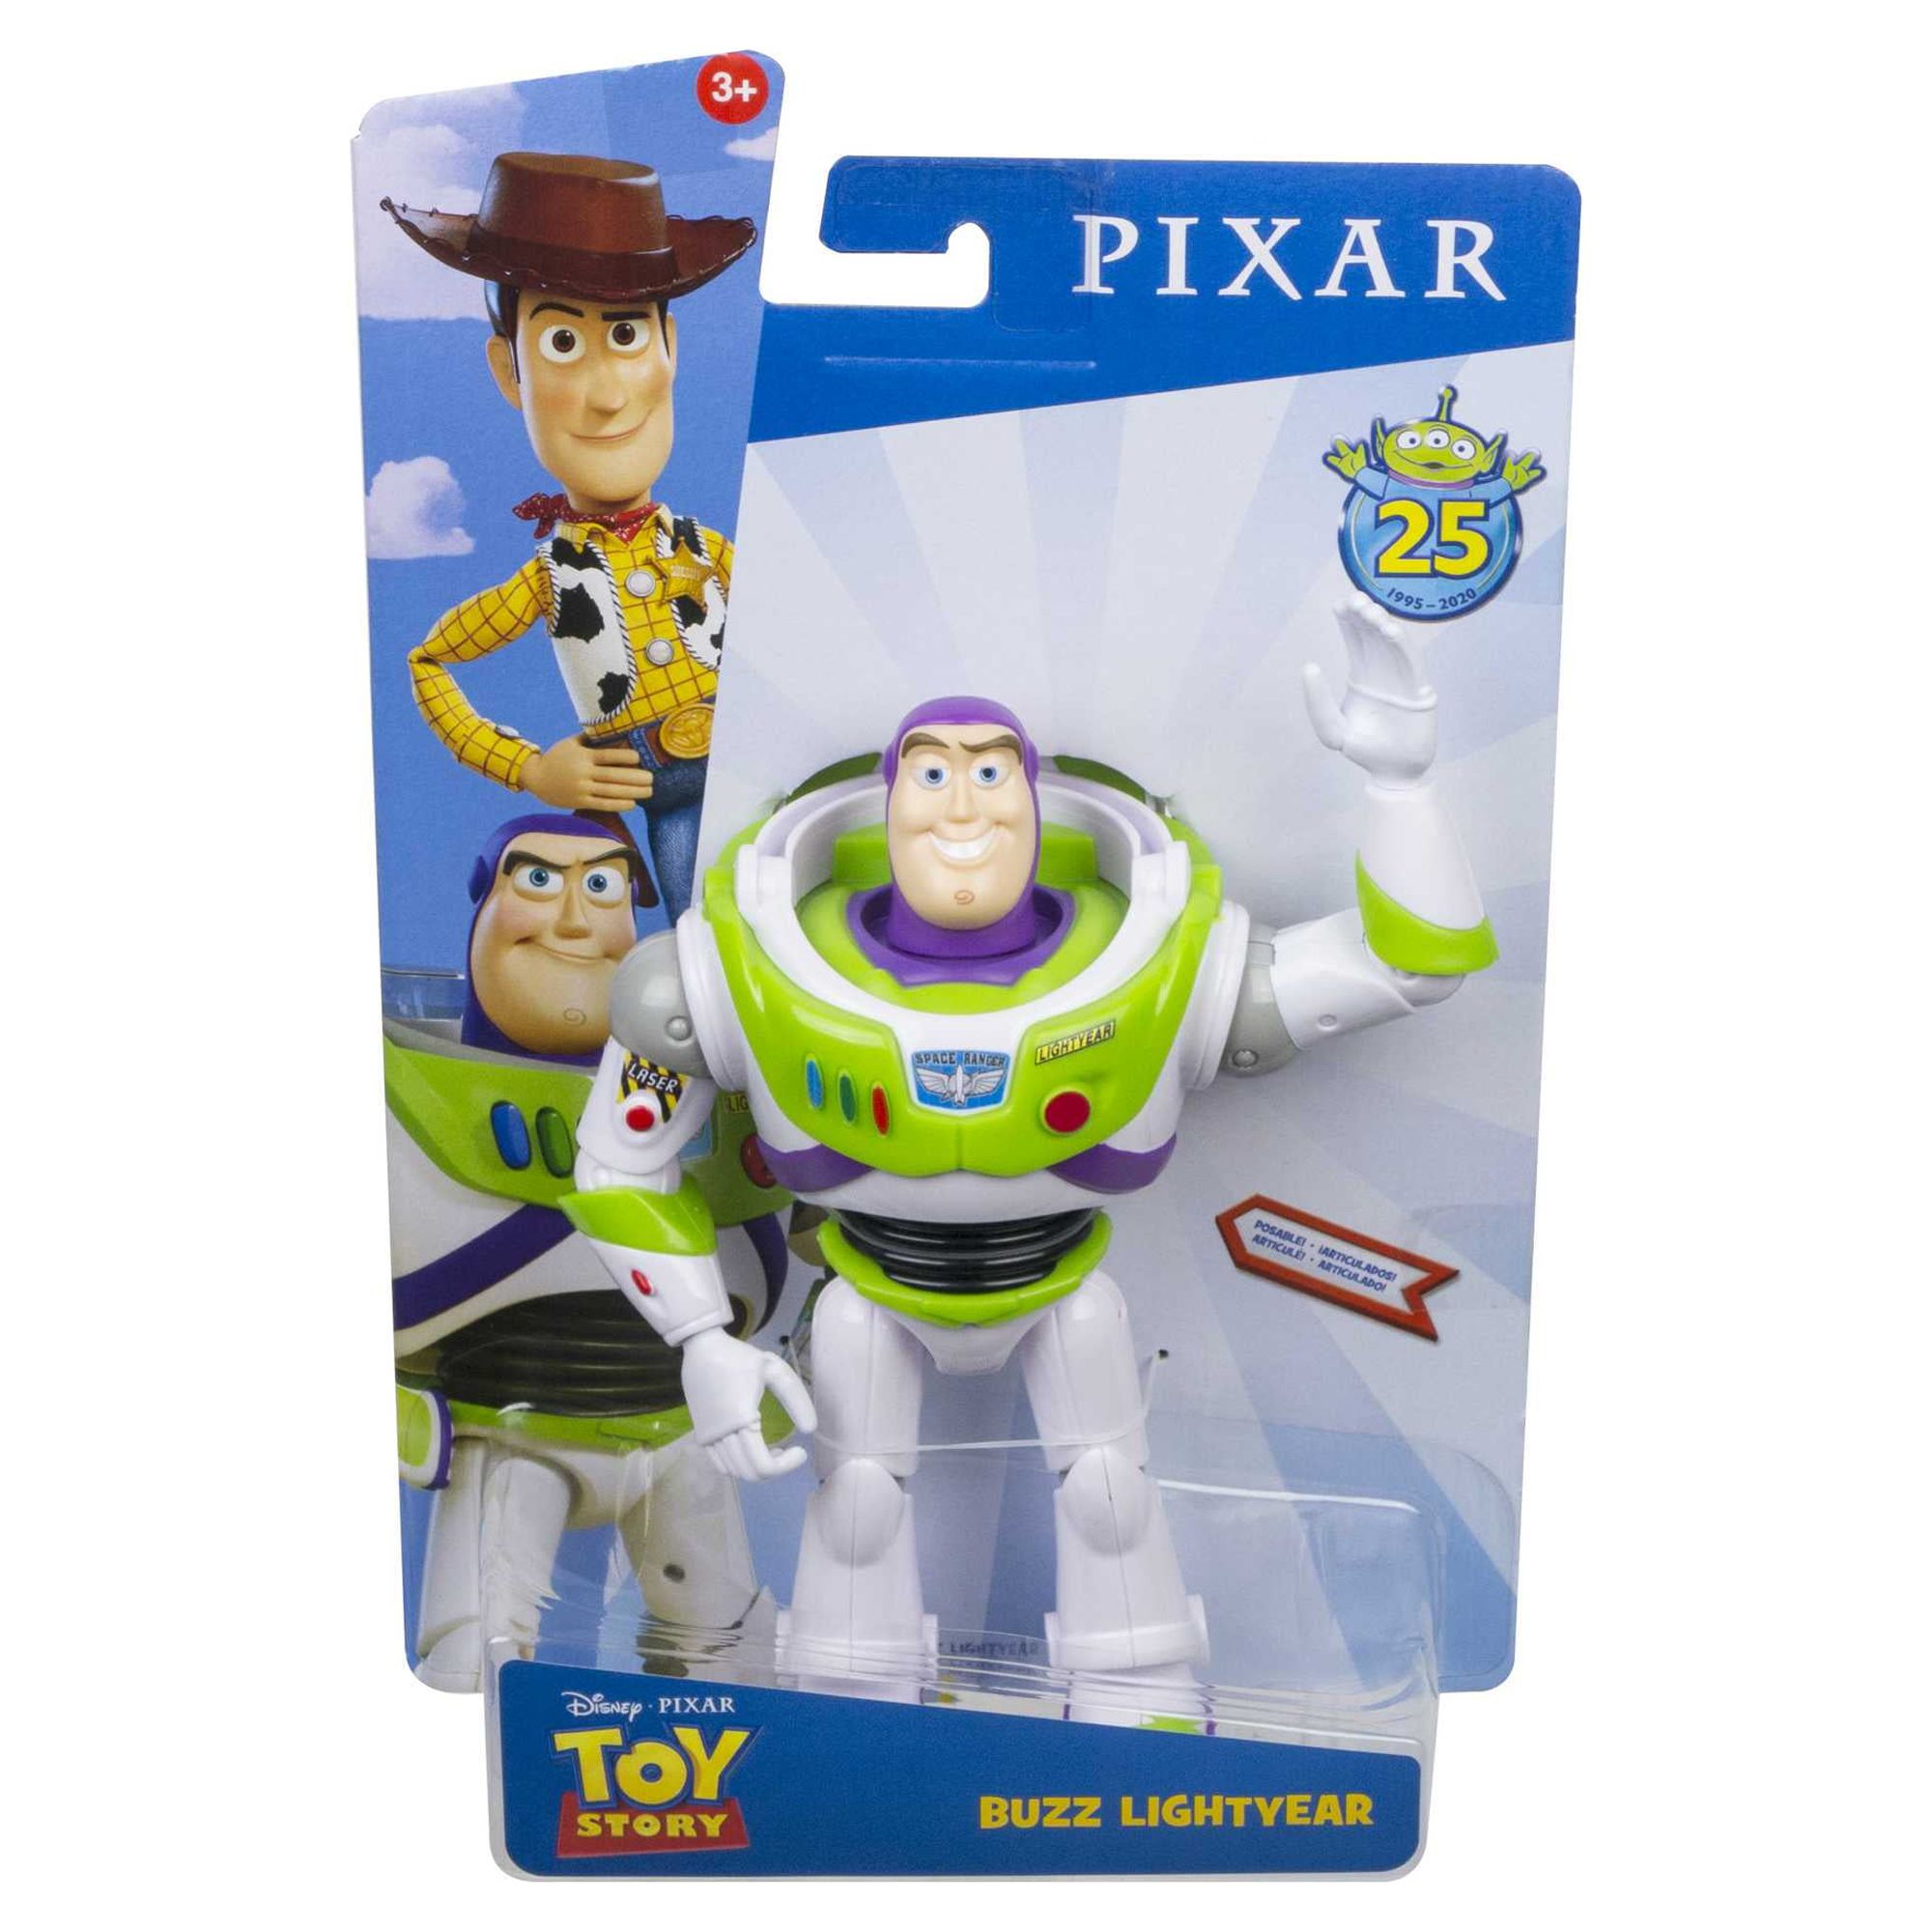 Disney Pixar Toy Story Buzz Lightyear Action Figure - image 6 of 6